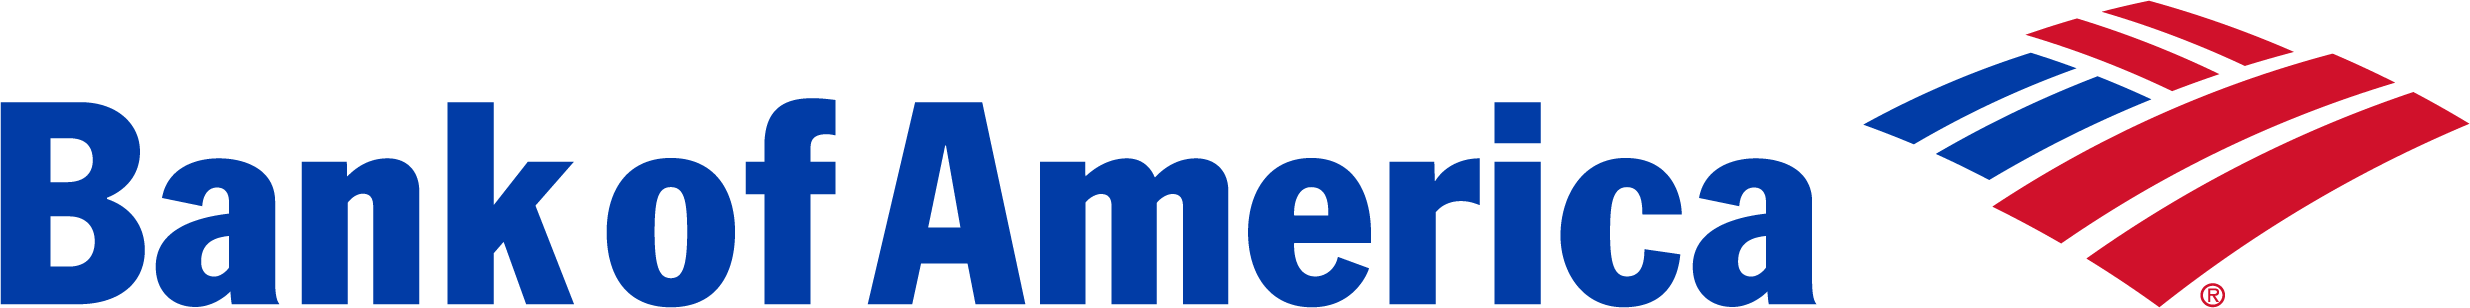 Bank of America Brand Logo